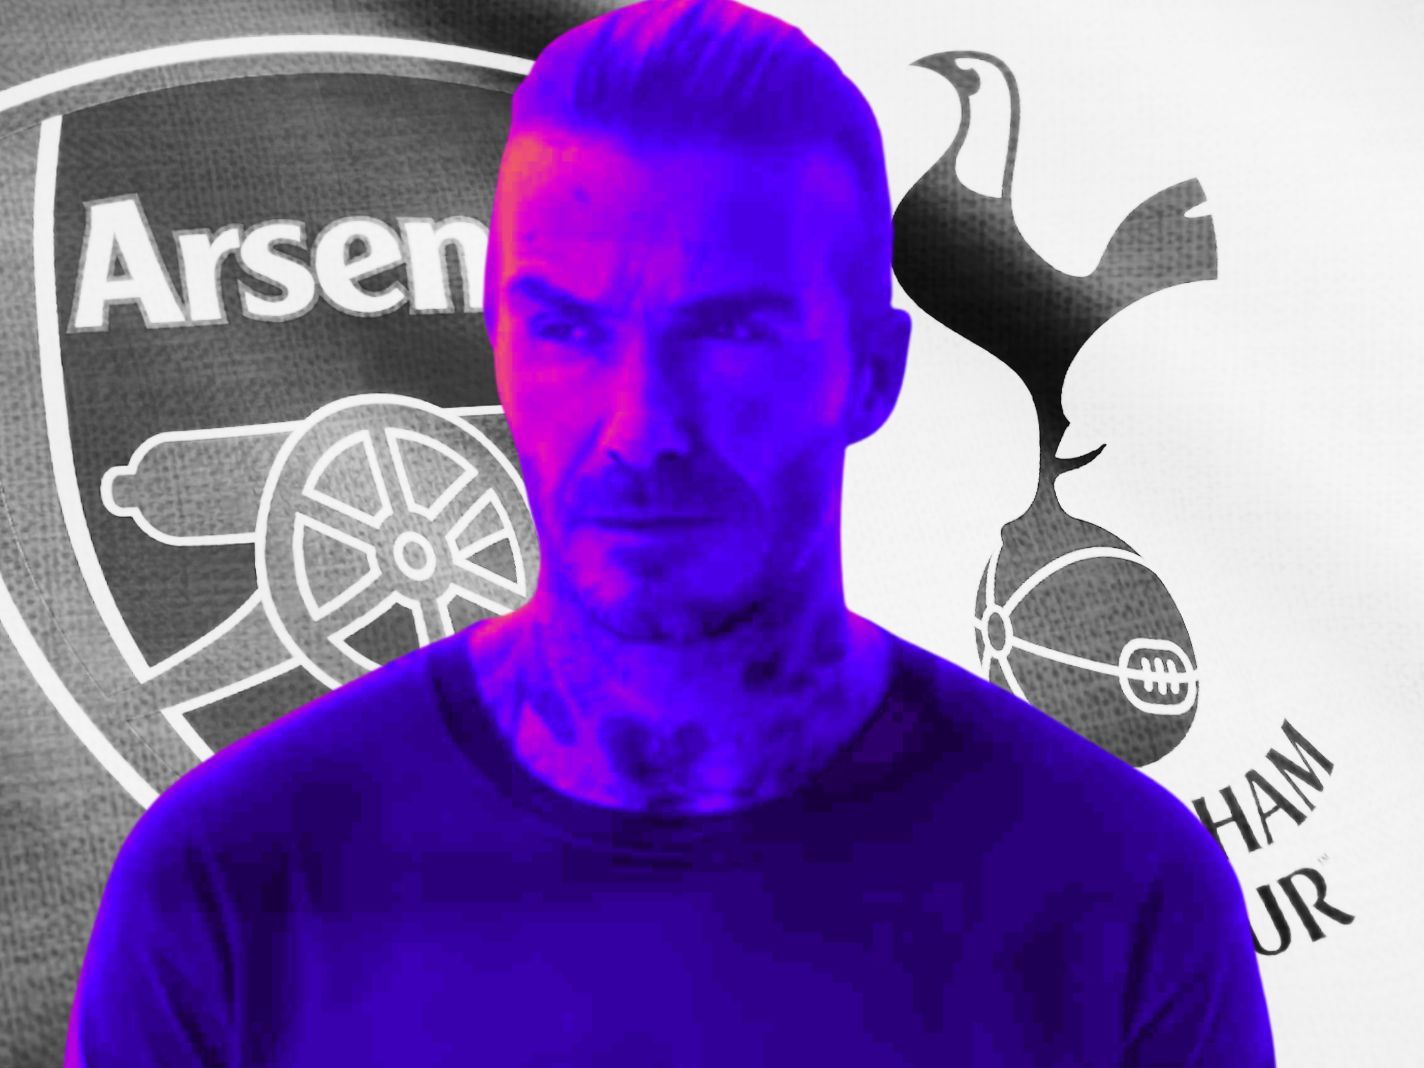 Who David Beckham Supports More: Tottenham or Arsenal?